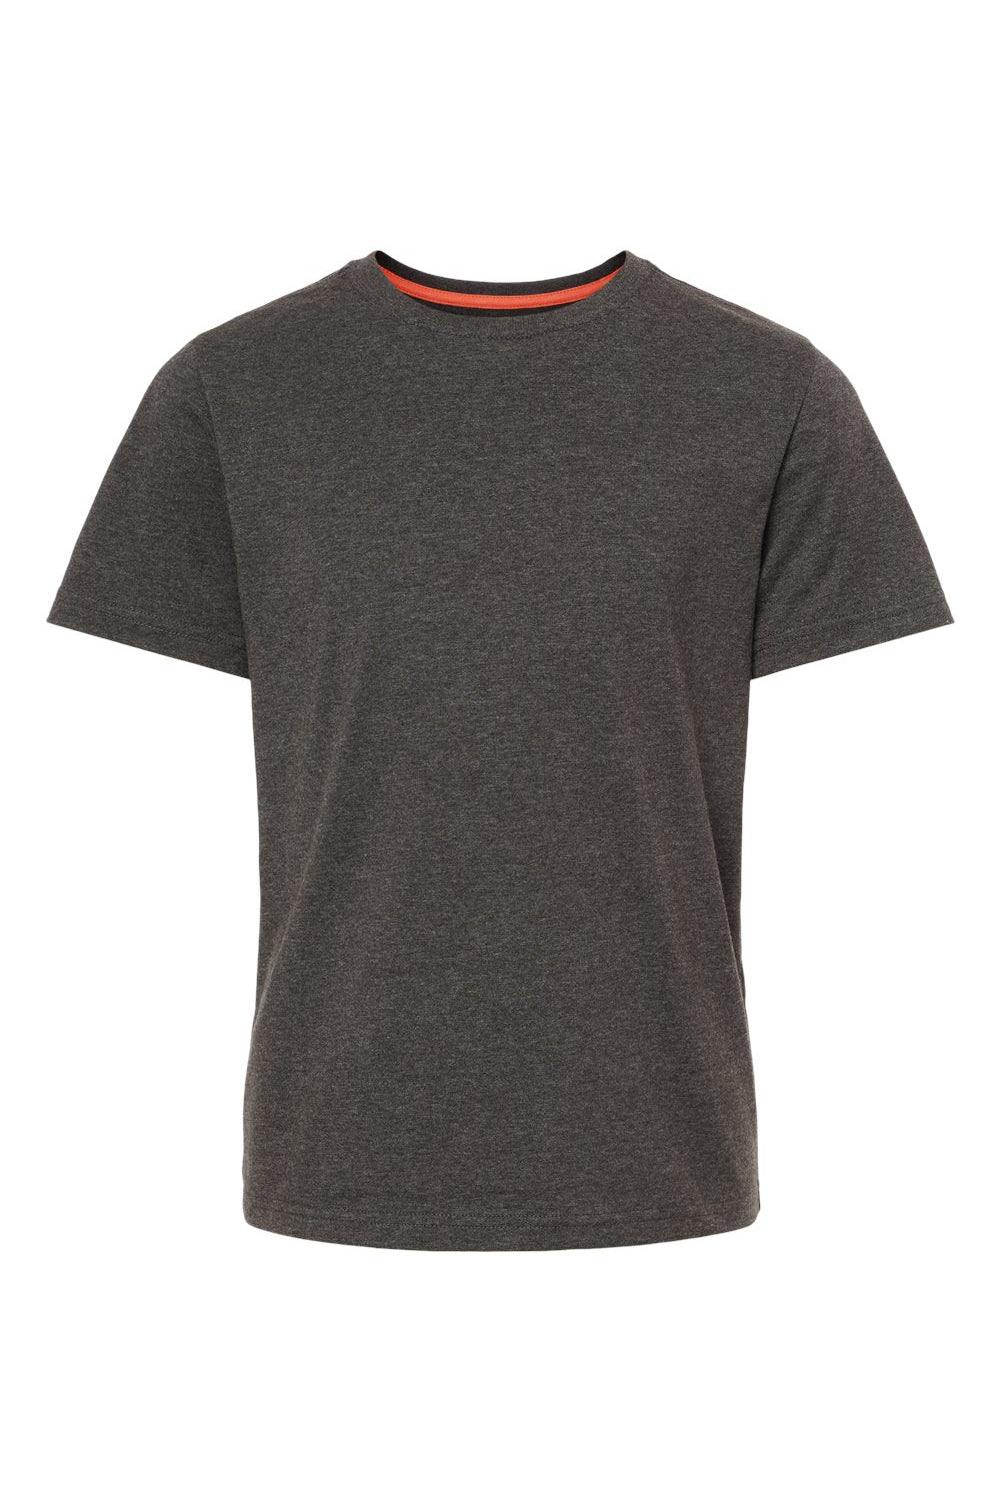 Kastlfel 2015 Youth RecycledSoft Short Sleeve Crewneck T-Shirt Carbon Grey Flat Front